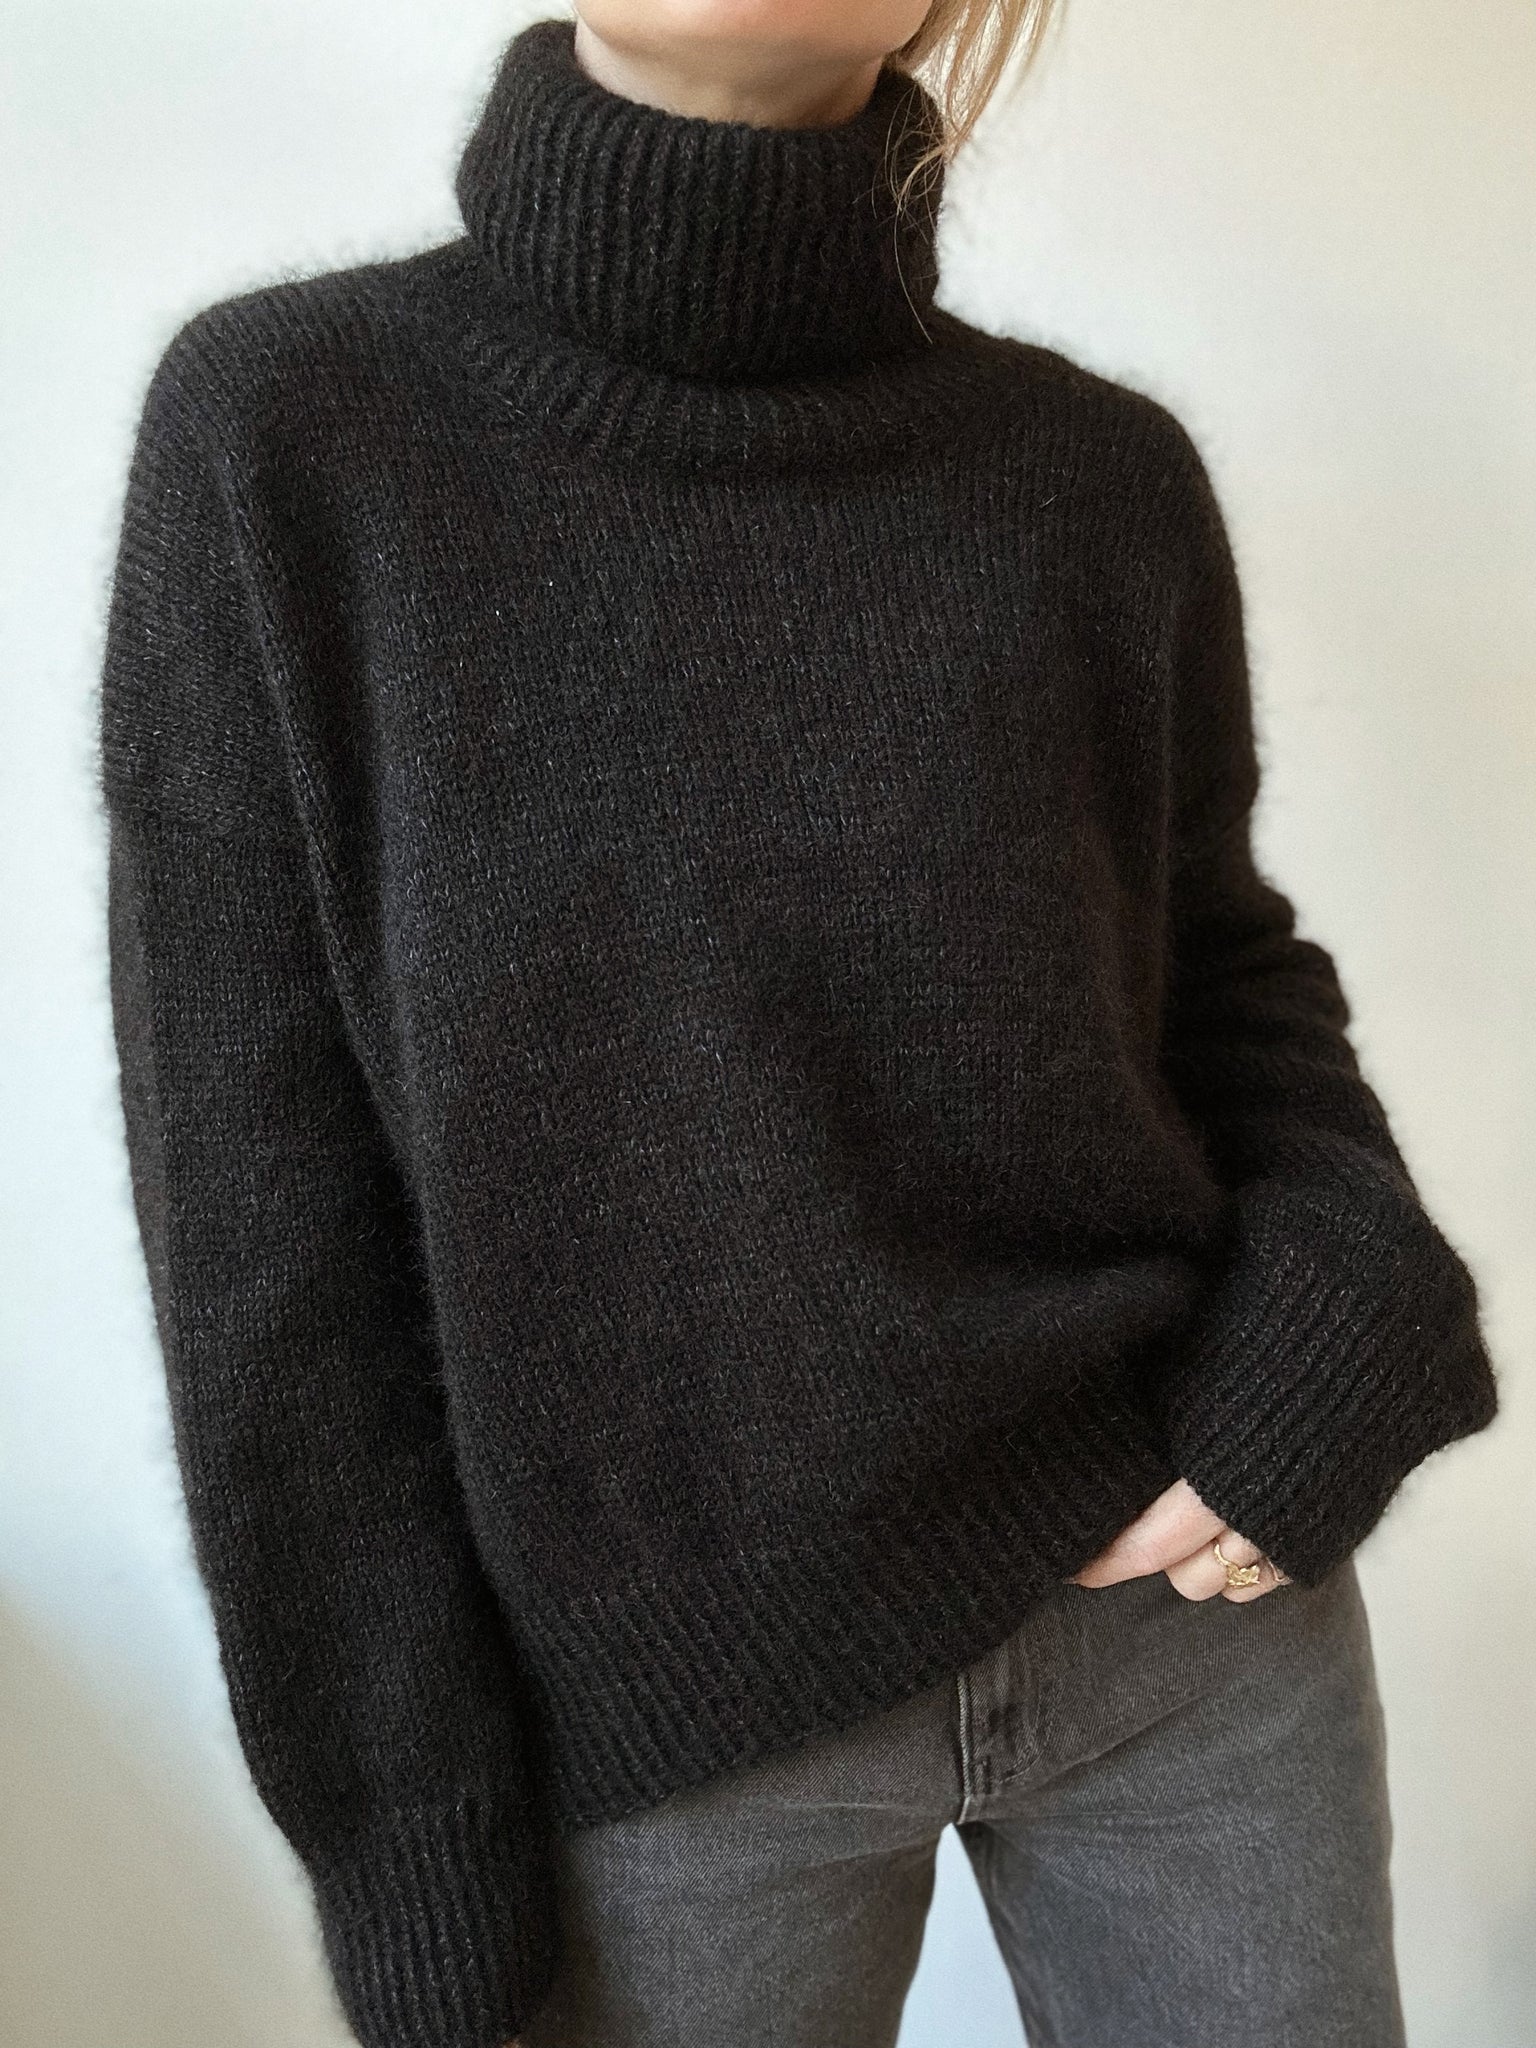 Sweater No. 11 light - My Favourite Things Knitwear - Strikkekit